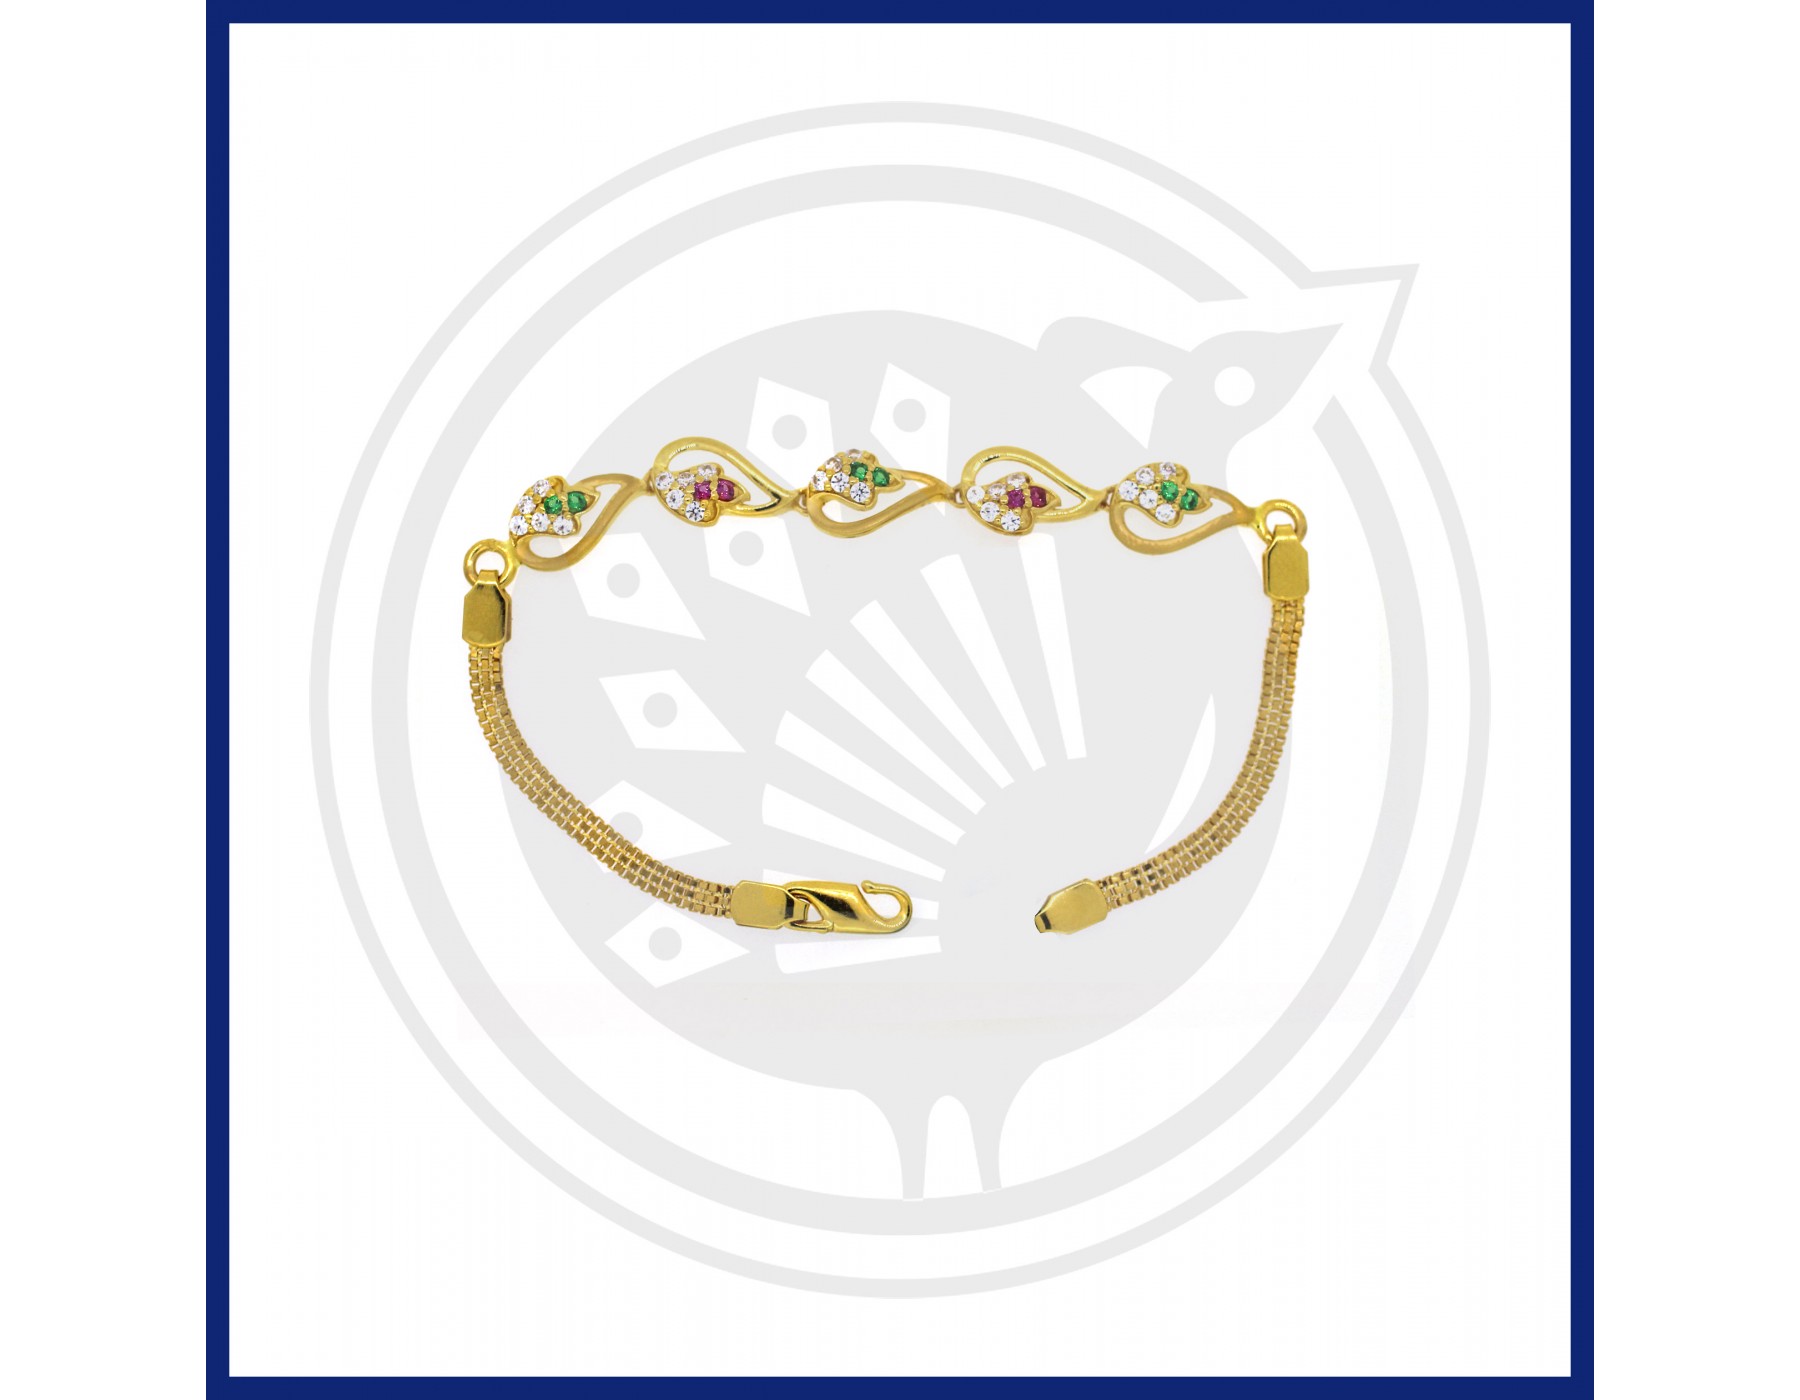 Buy Latest Gold Bracelets for Women Online | Real Gold Jadau Bracelet